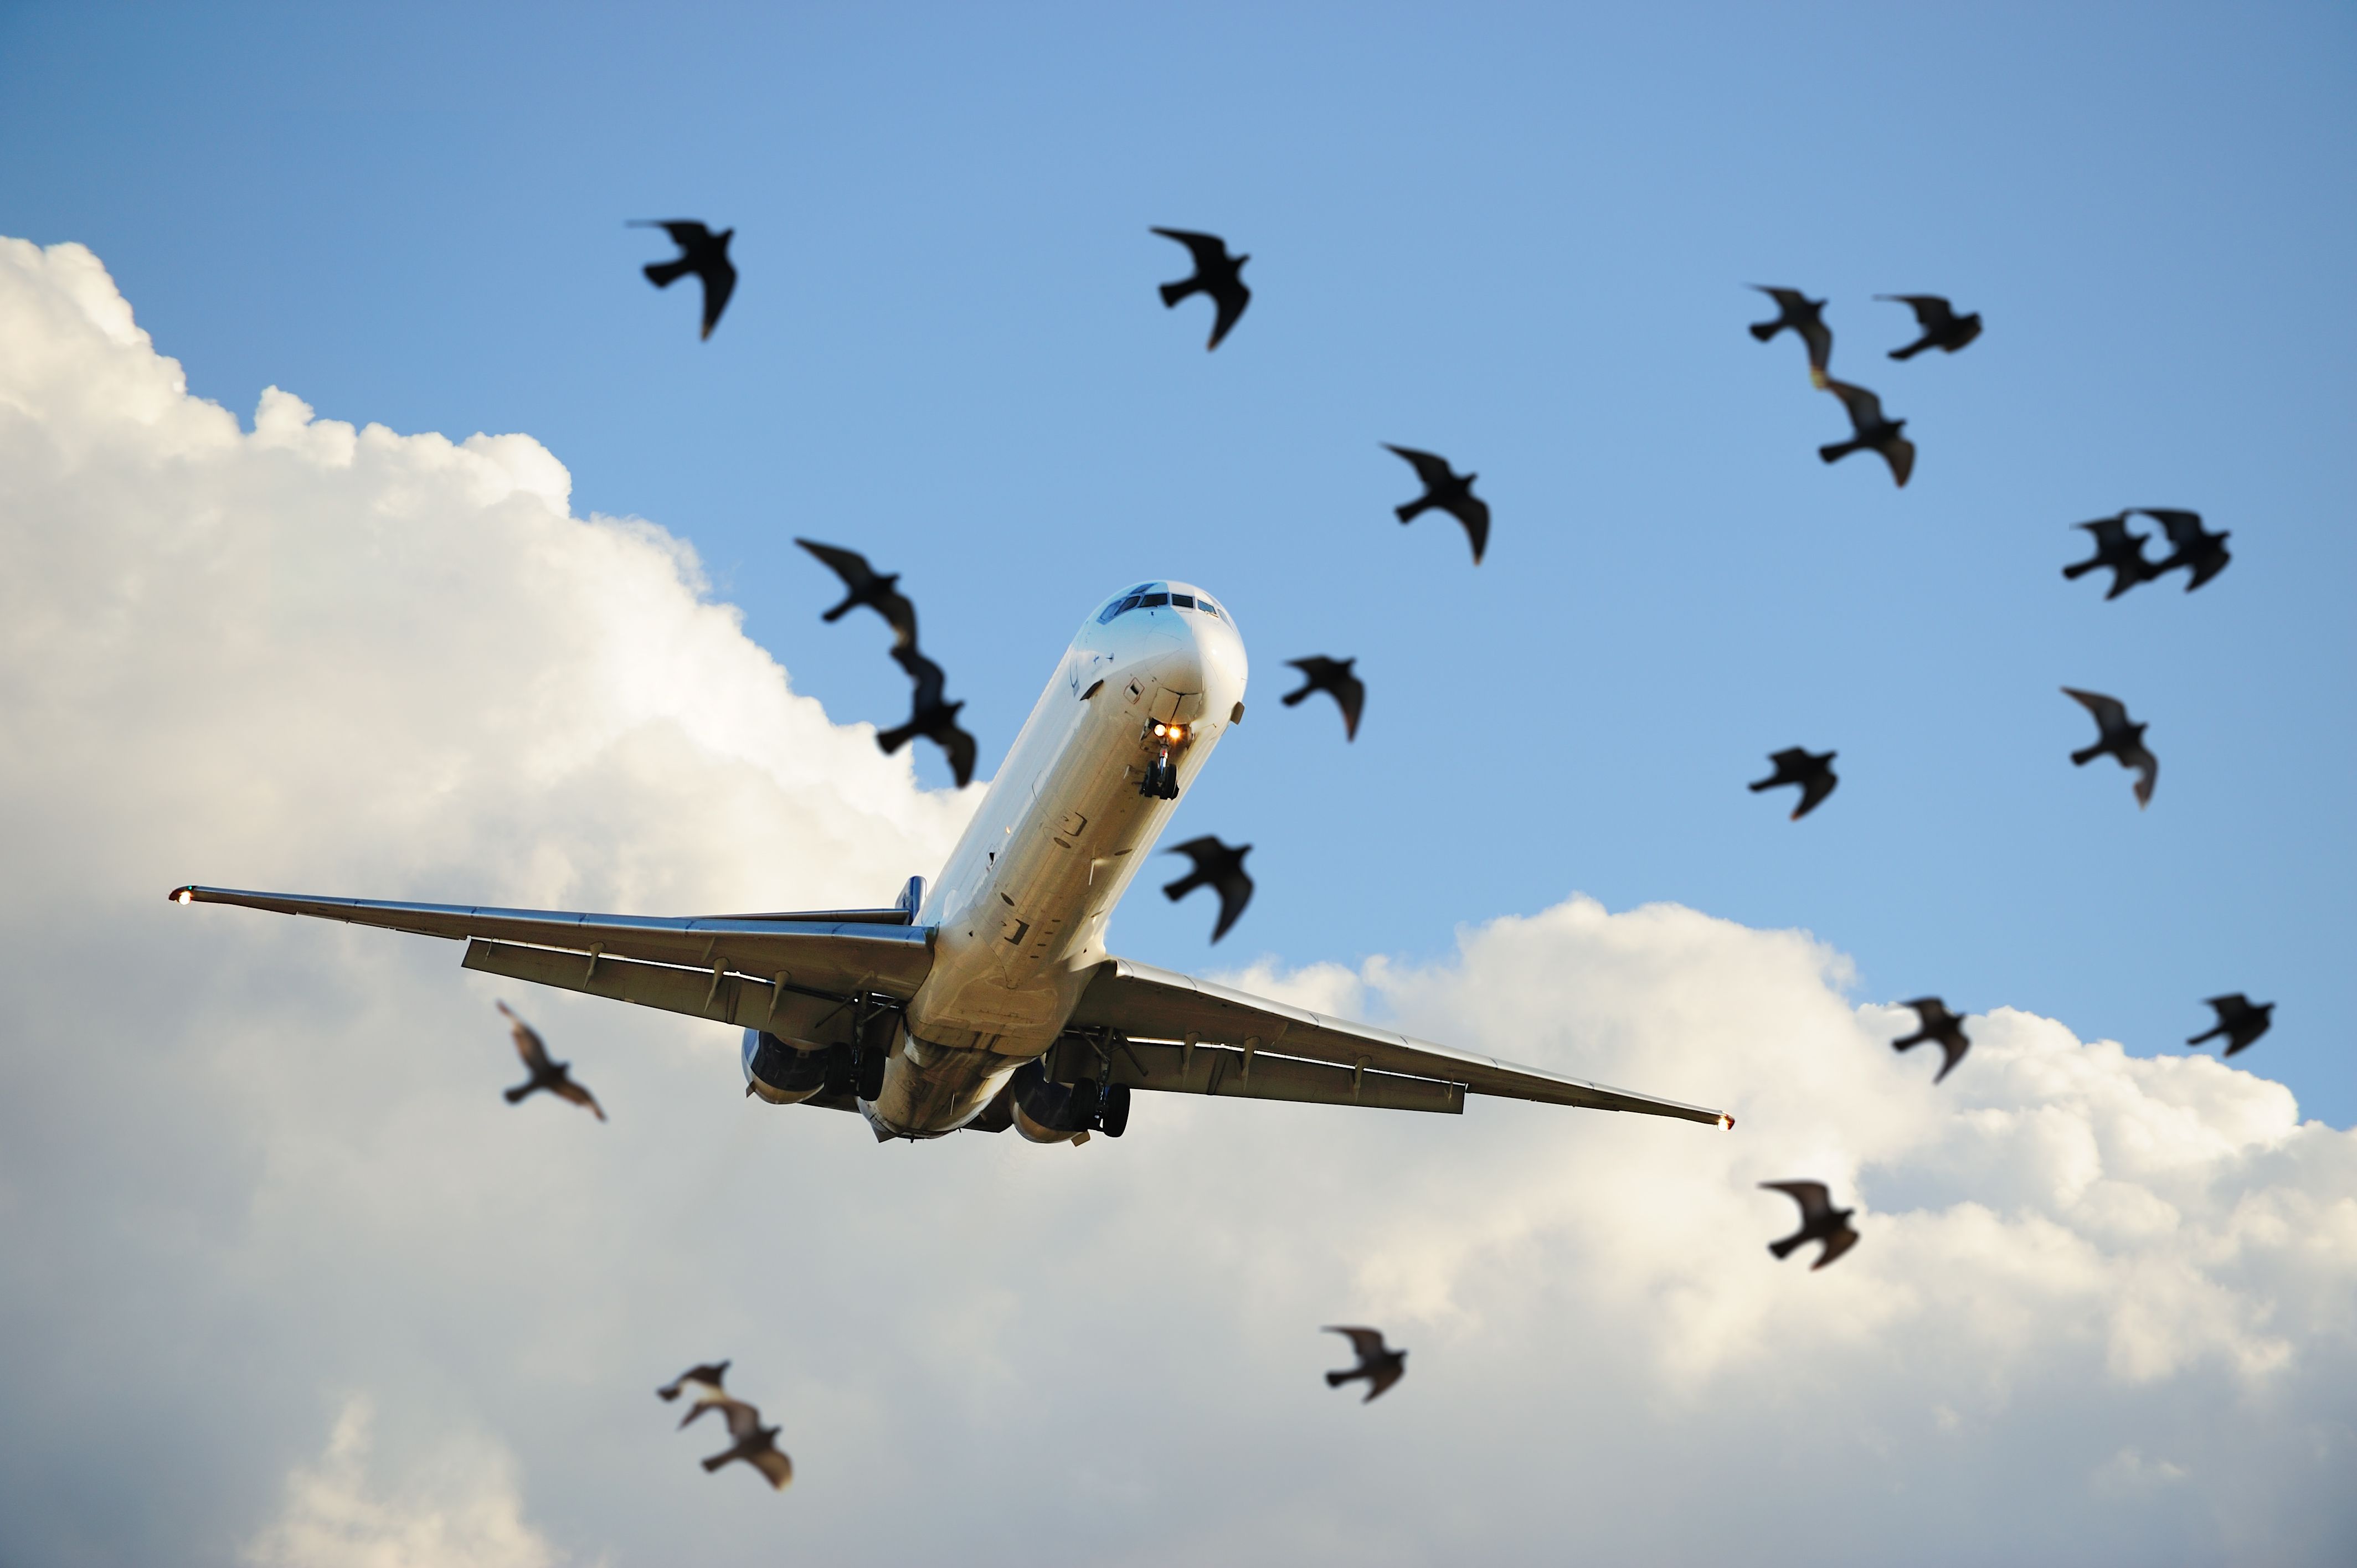 Pestman Bird Repellent: Birds don’t use airports as habitats